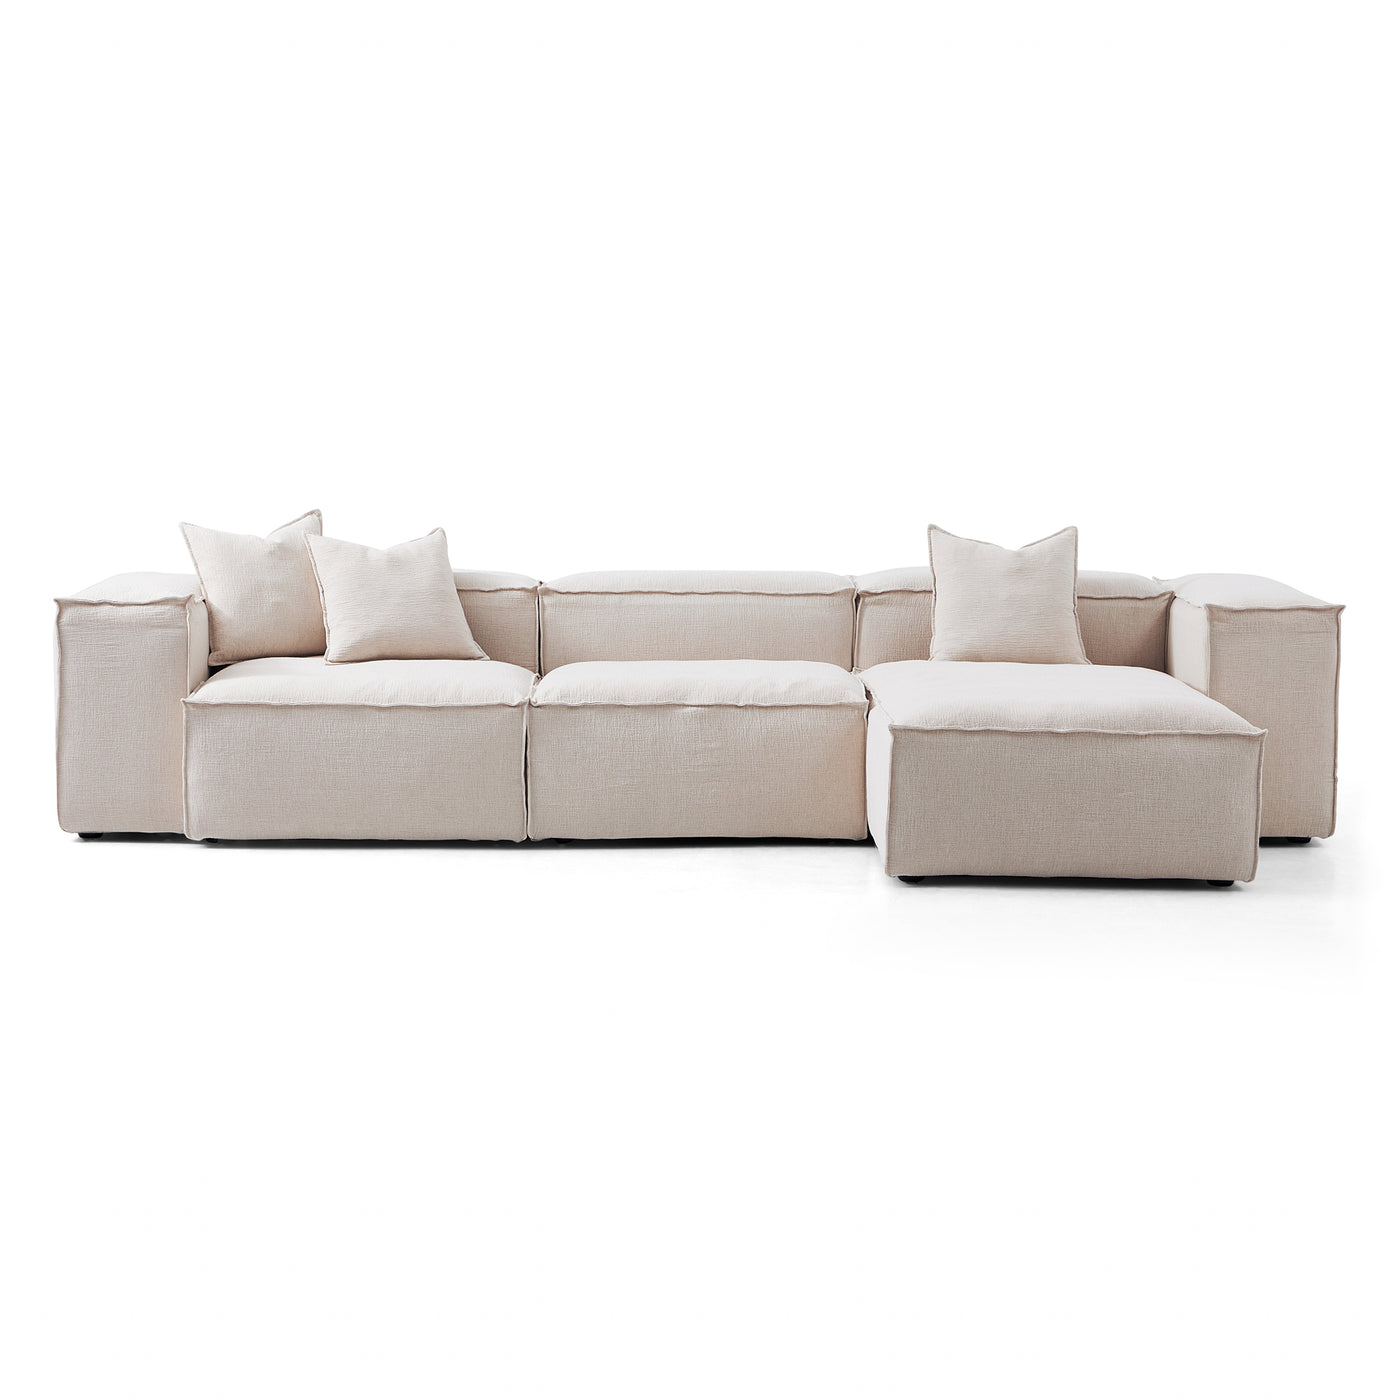 Freedom Modular Khaki Sectional Sofa-hidden